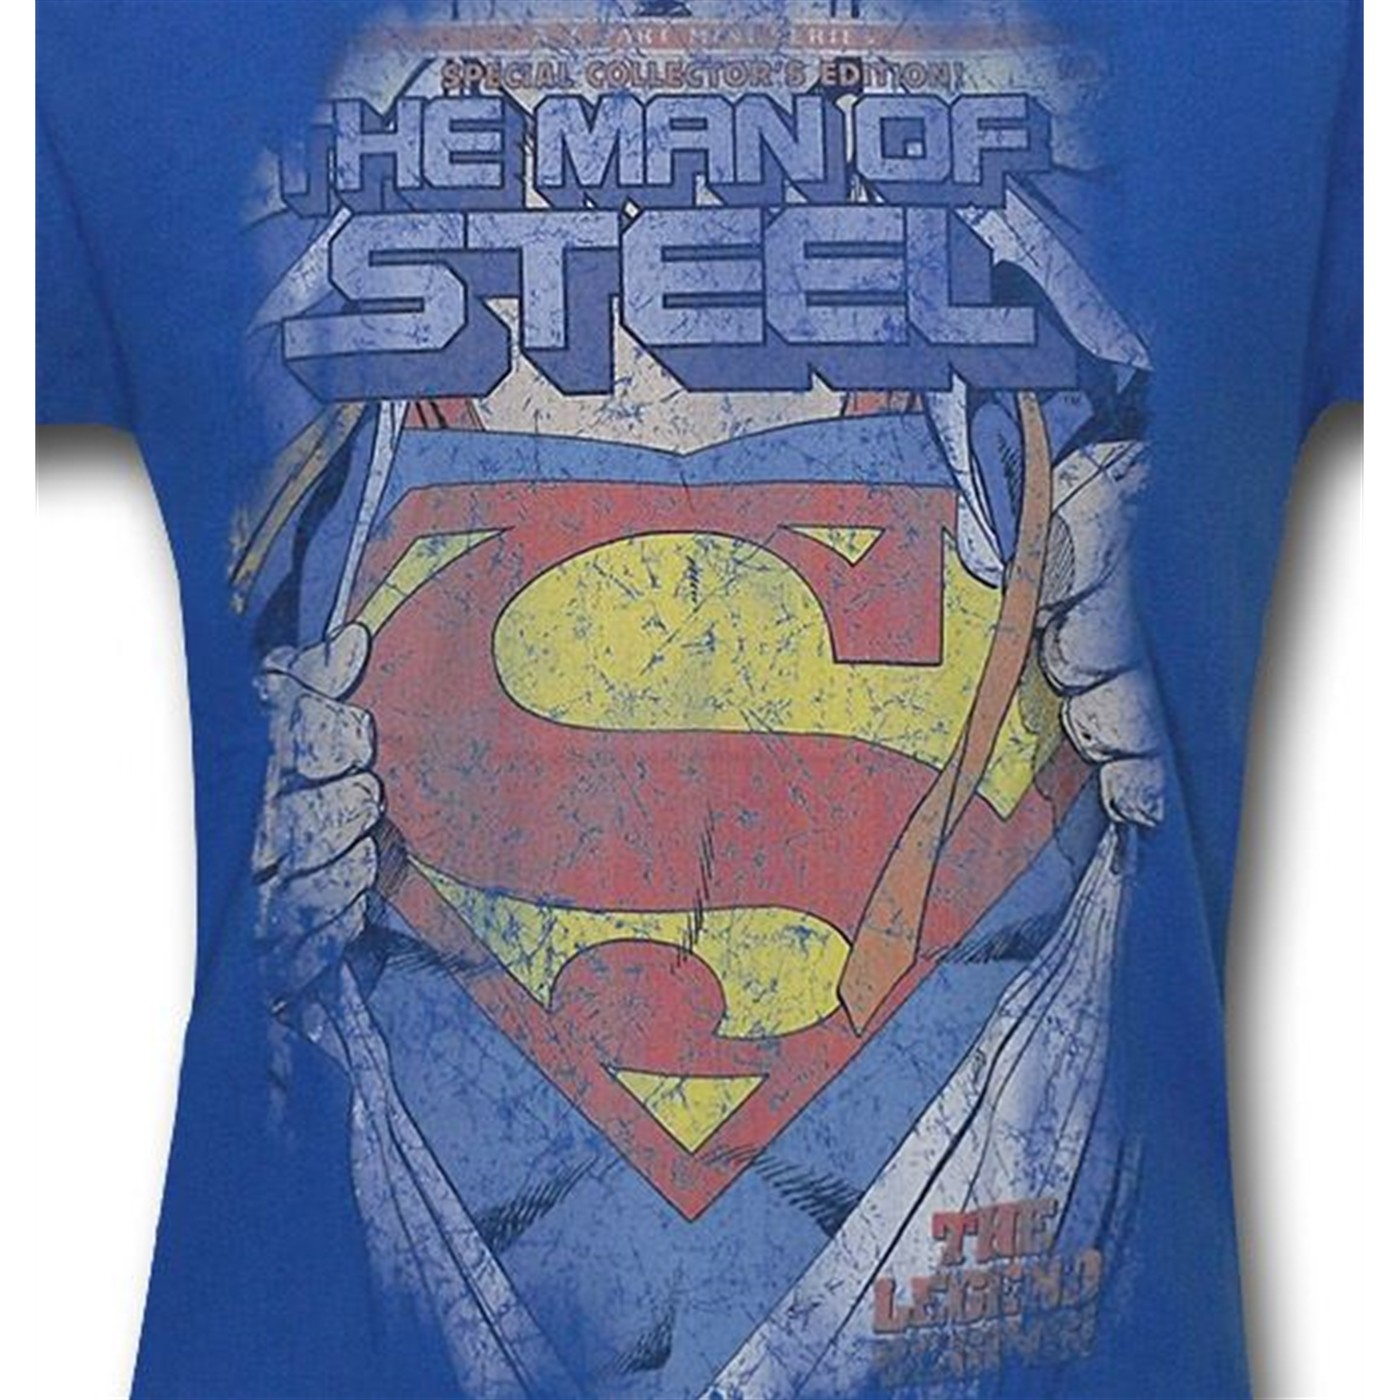 Superman Shield Revealed (30 Single) T-Shirt